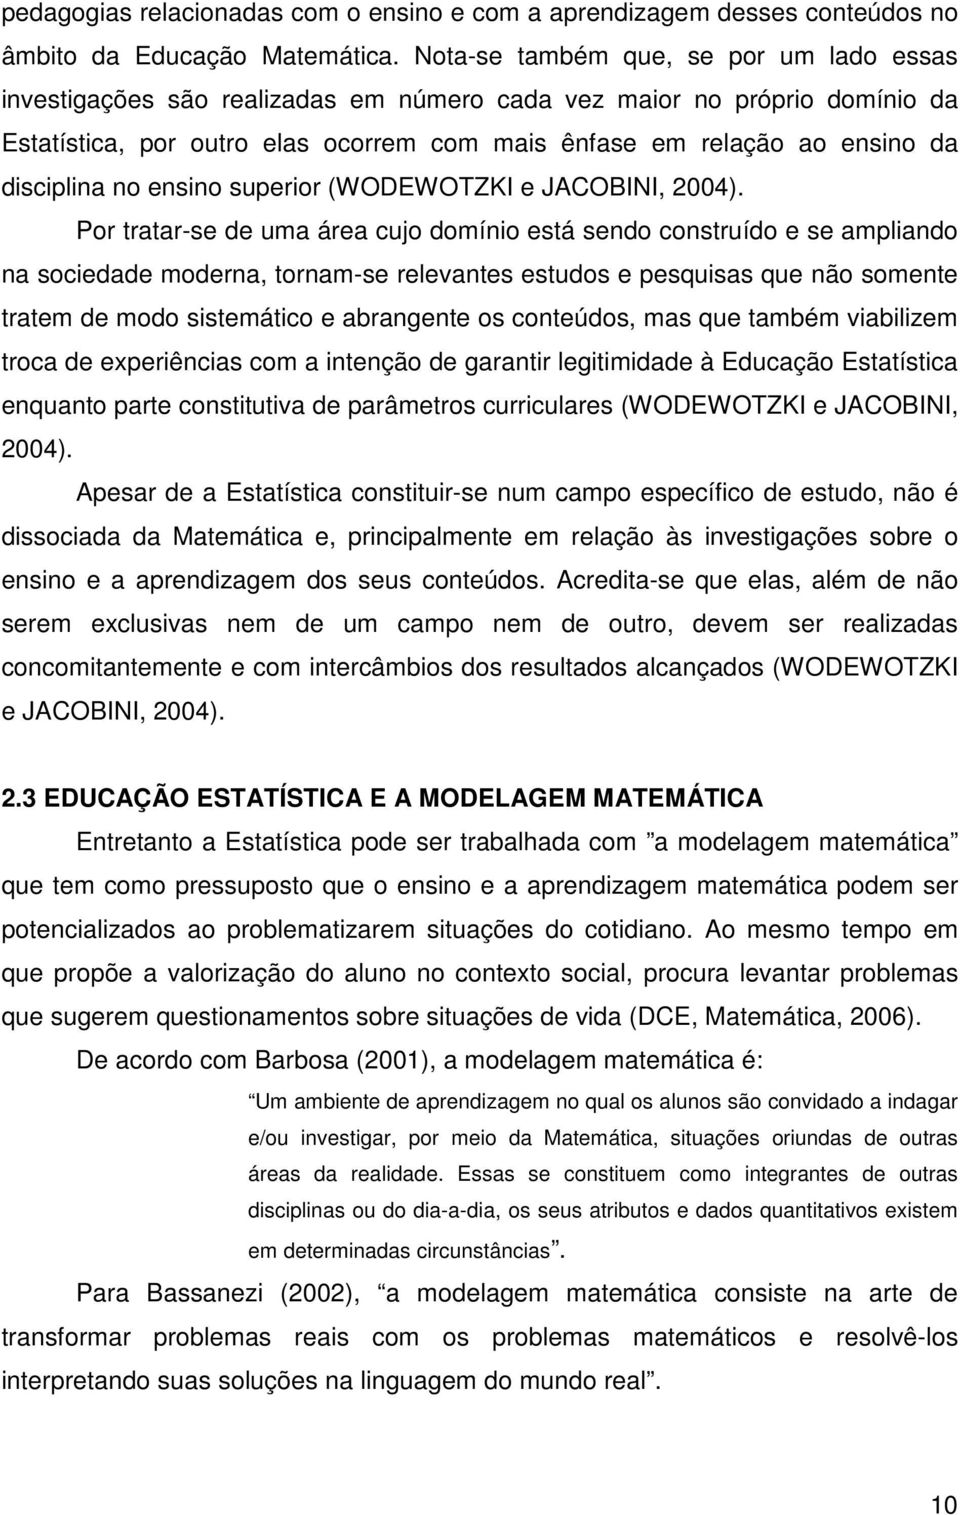 disciplina no ensino superior (WODEWOTZKI e JACOBINI, 2004).